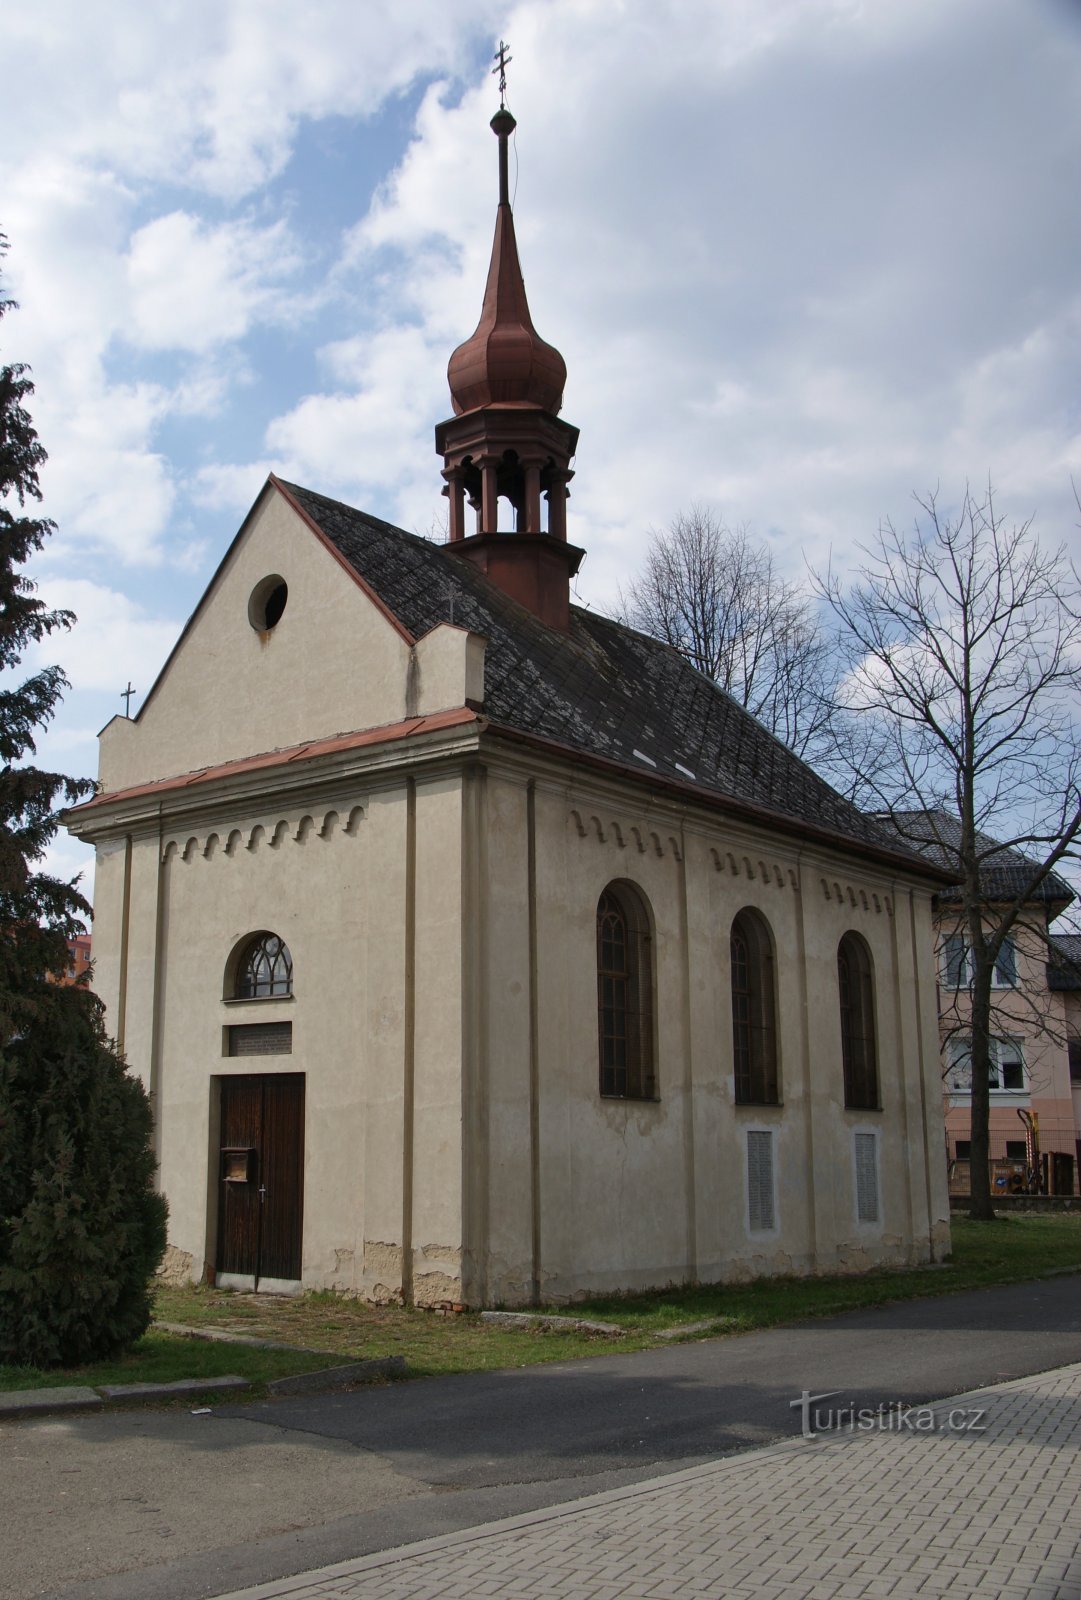 Dolní Temenice (Šumperk) – Cappella della Sacra Famiglia